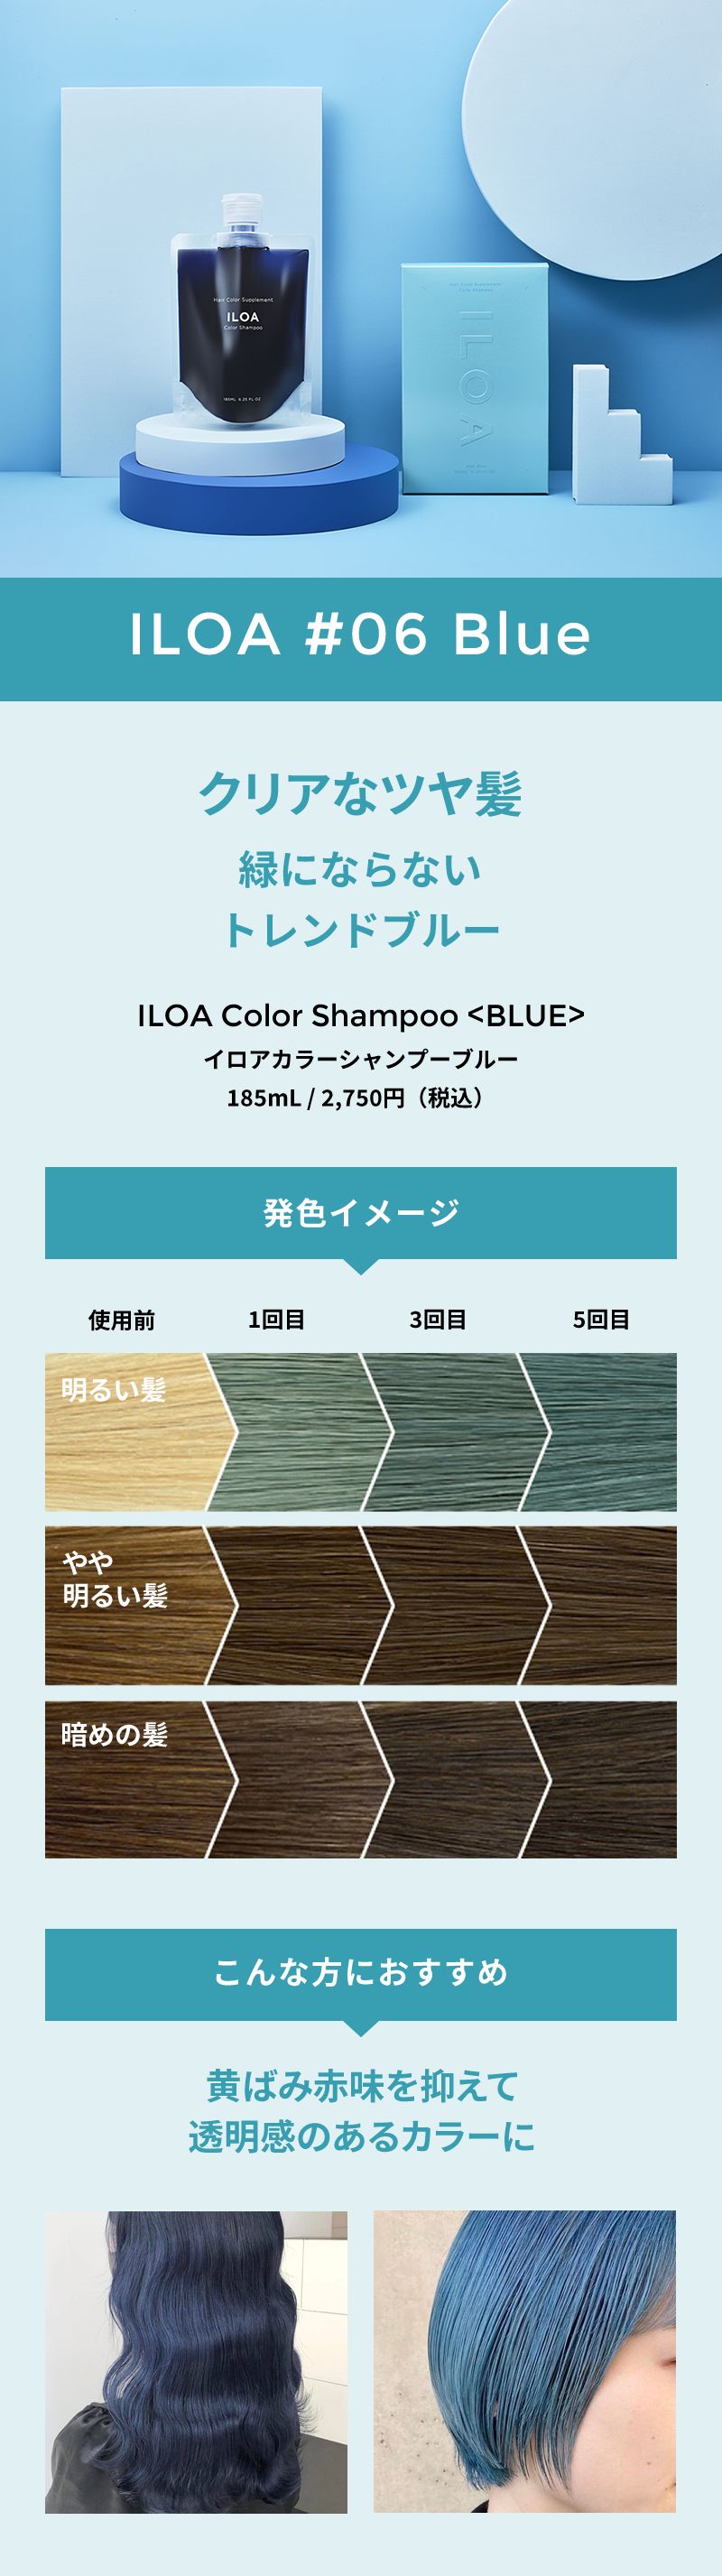 ILOA ヘアカラーサプリメント カラーシャンプー